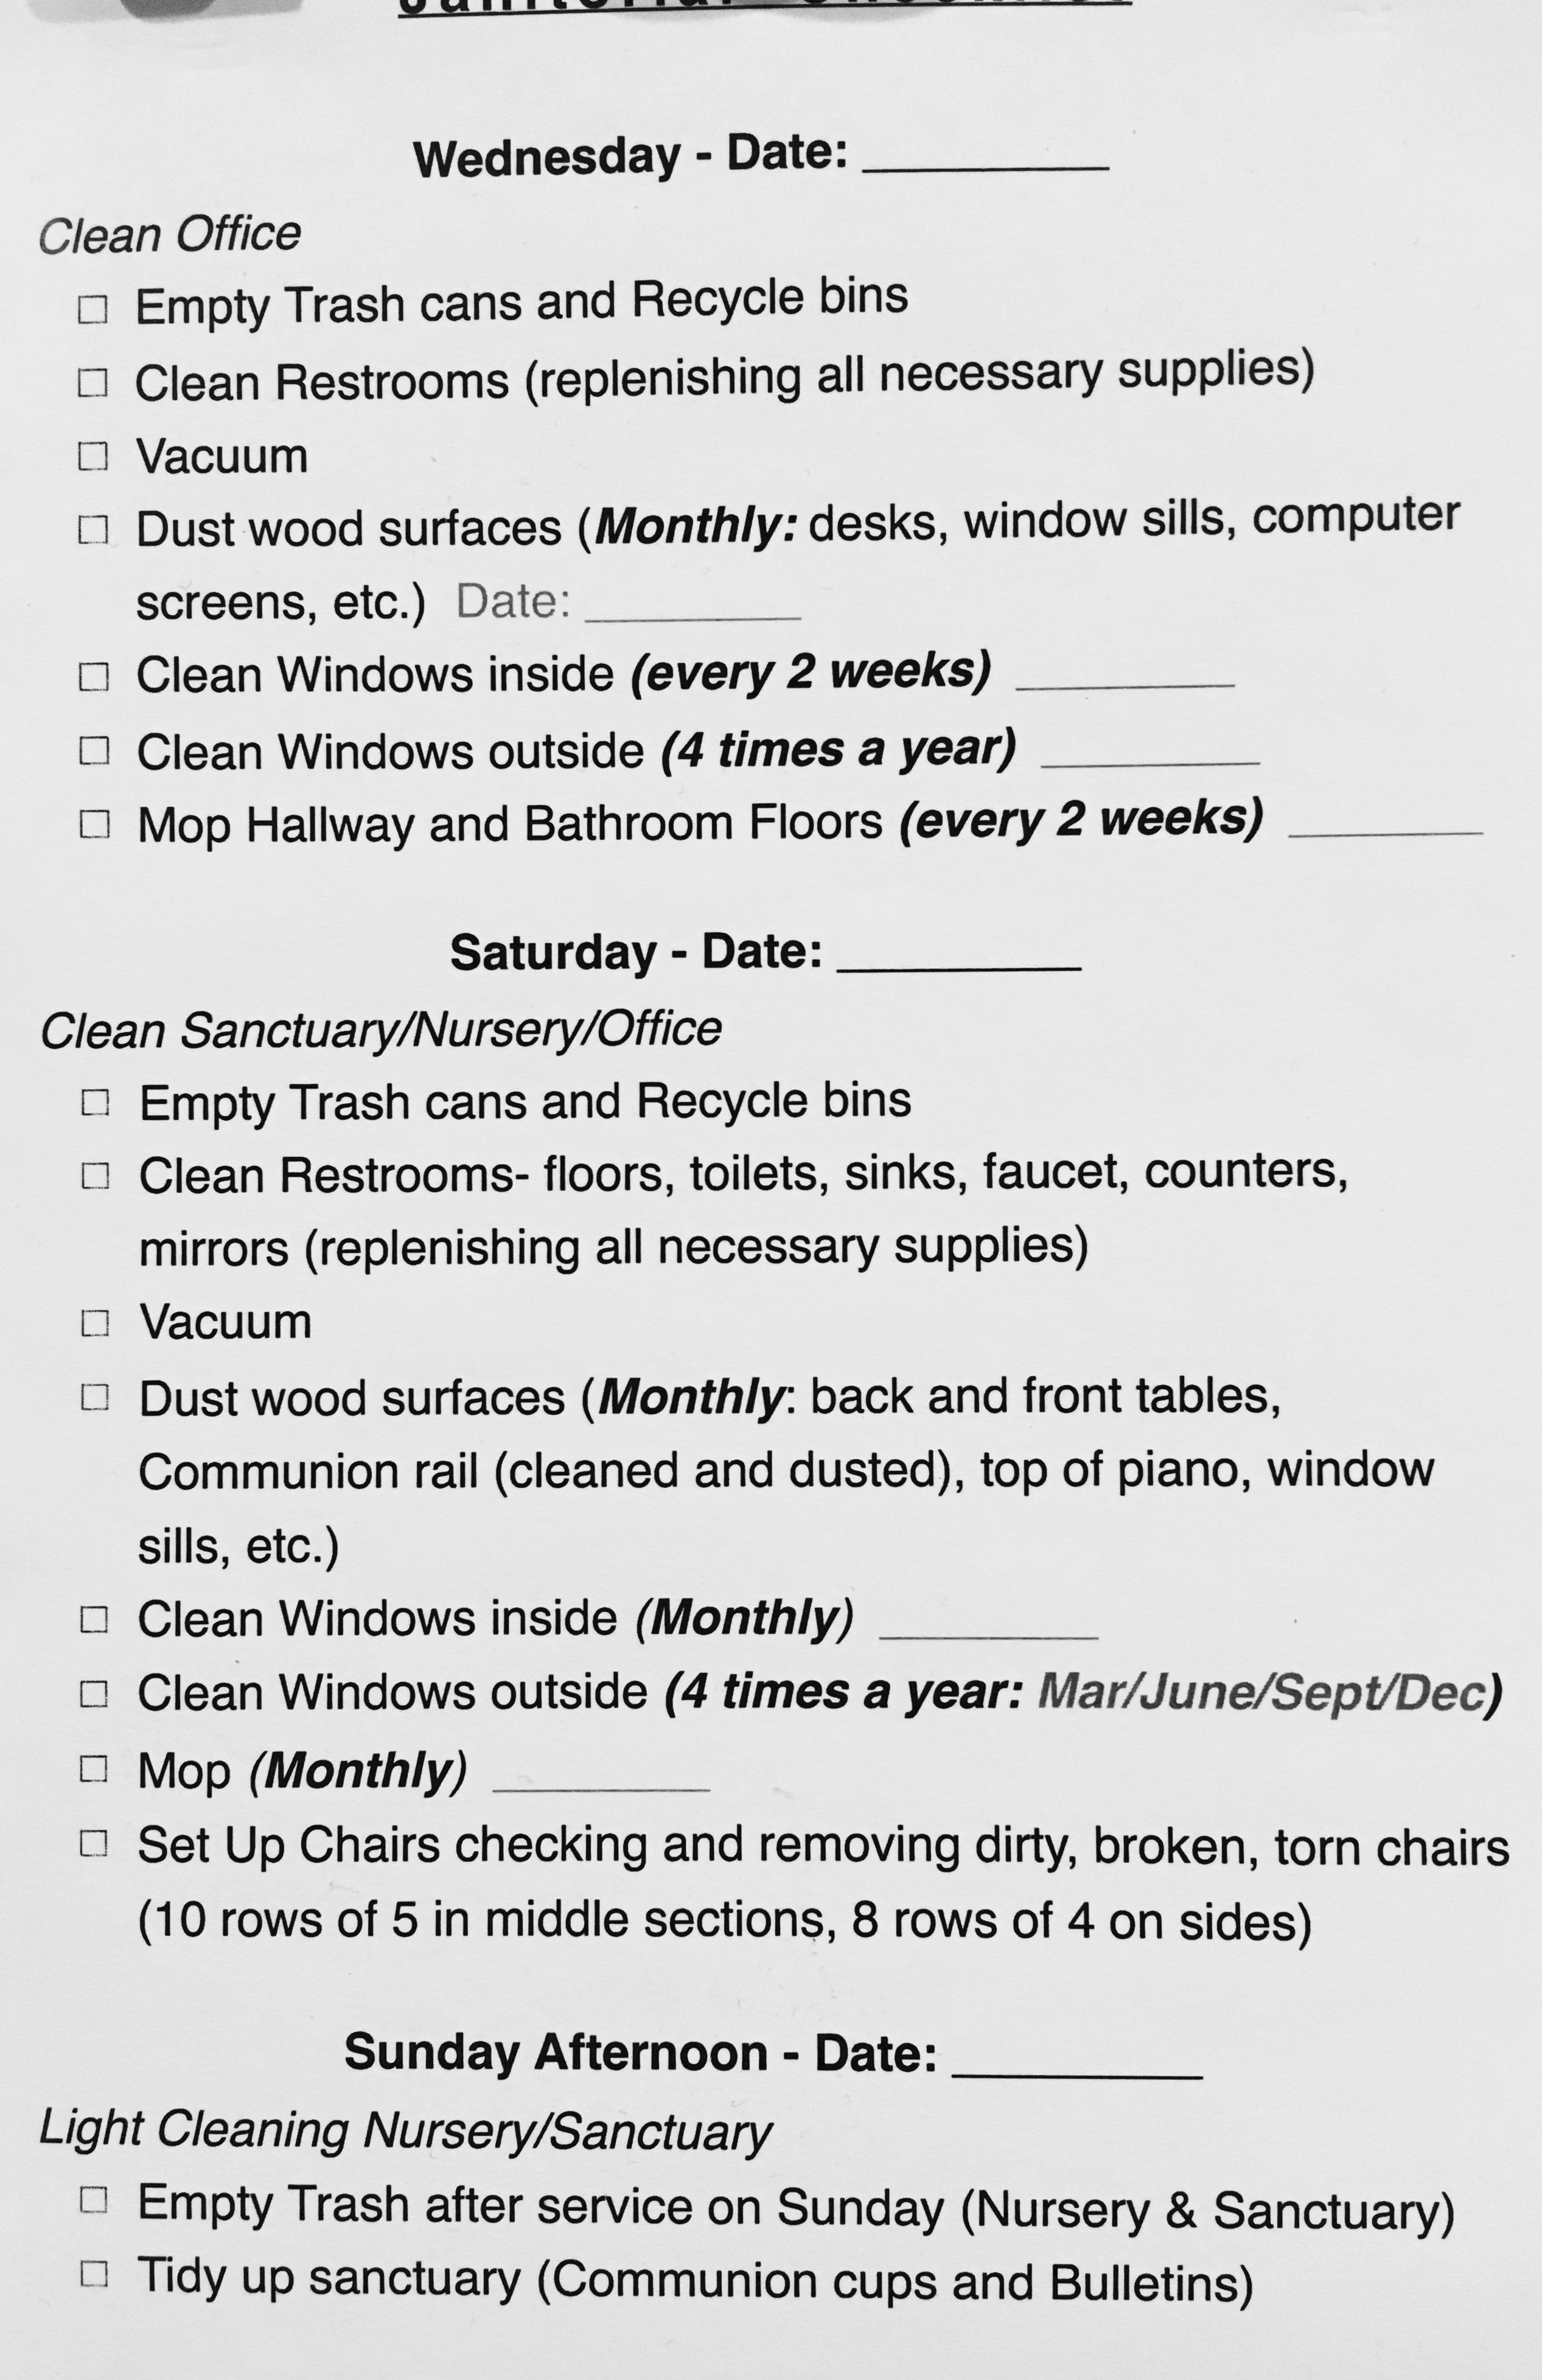 janitorial-checklist-good-shepherd-presbyterian-church